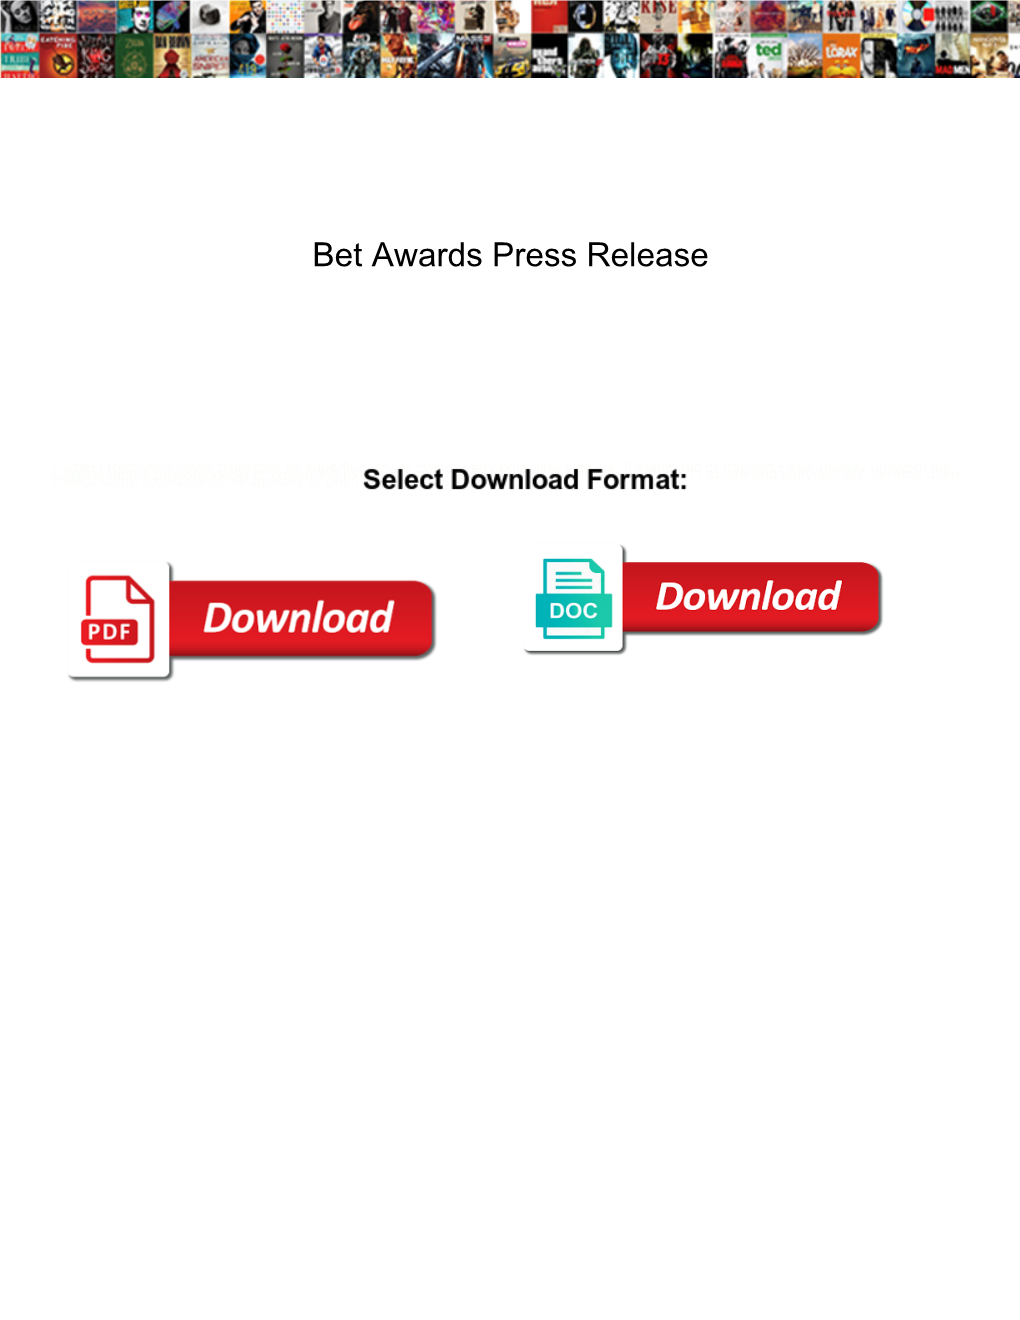 Bet Awards Press Release Pansa